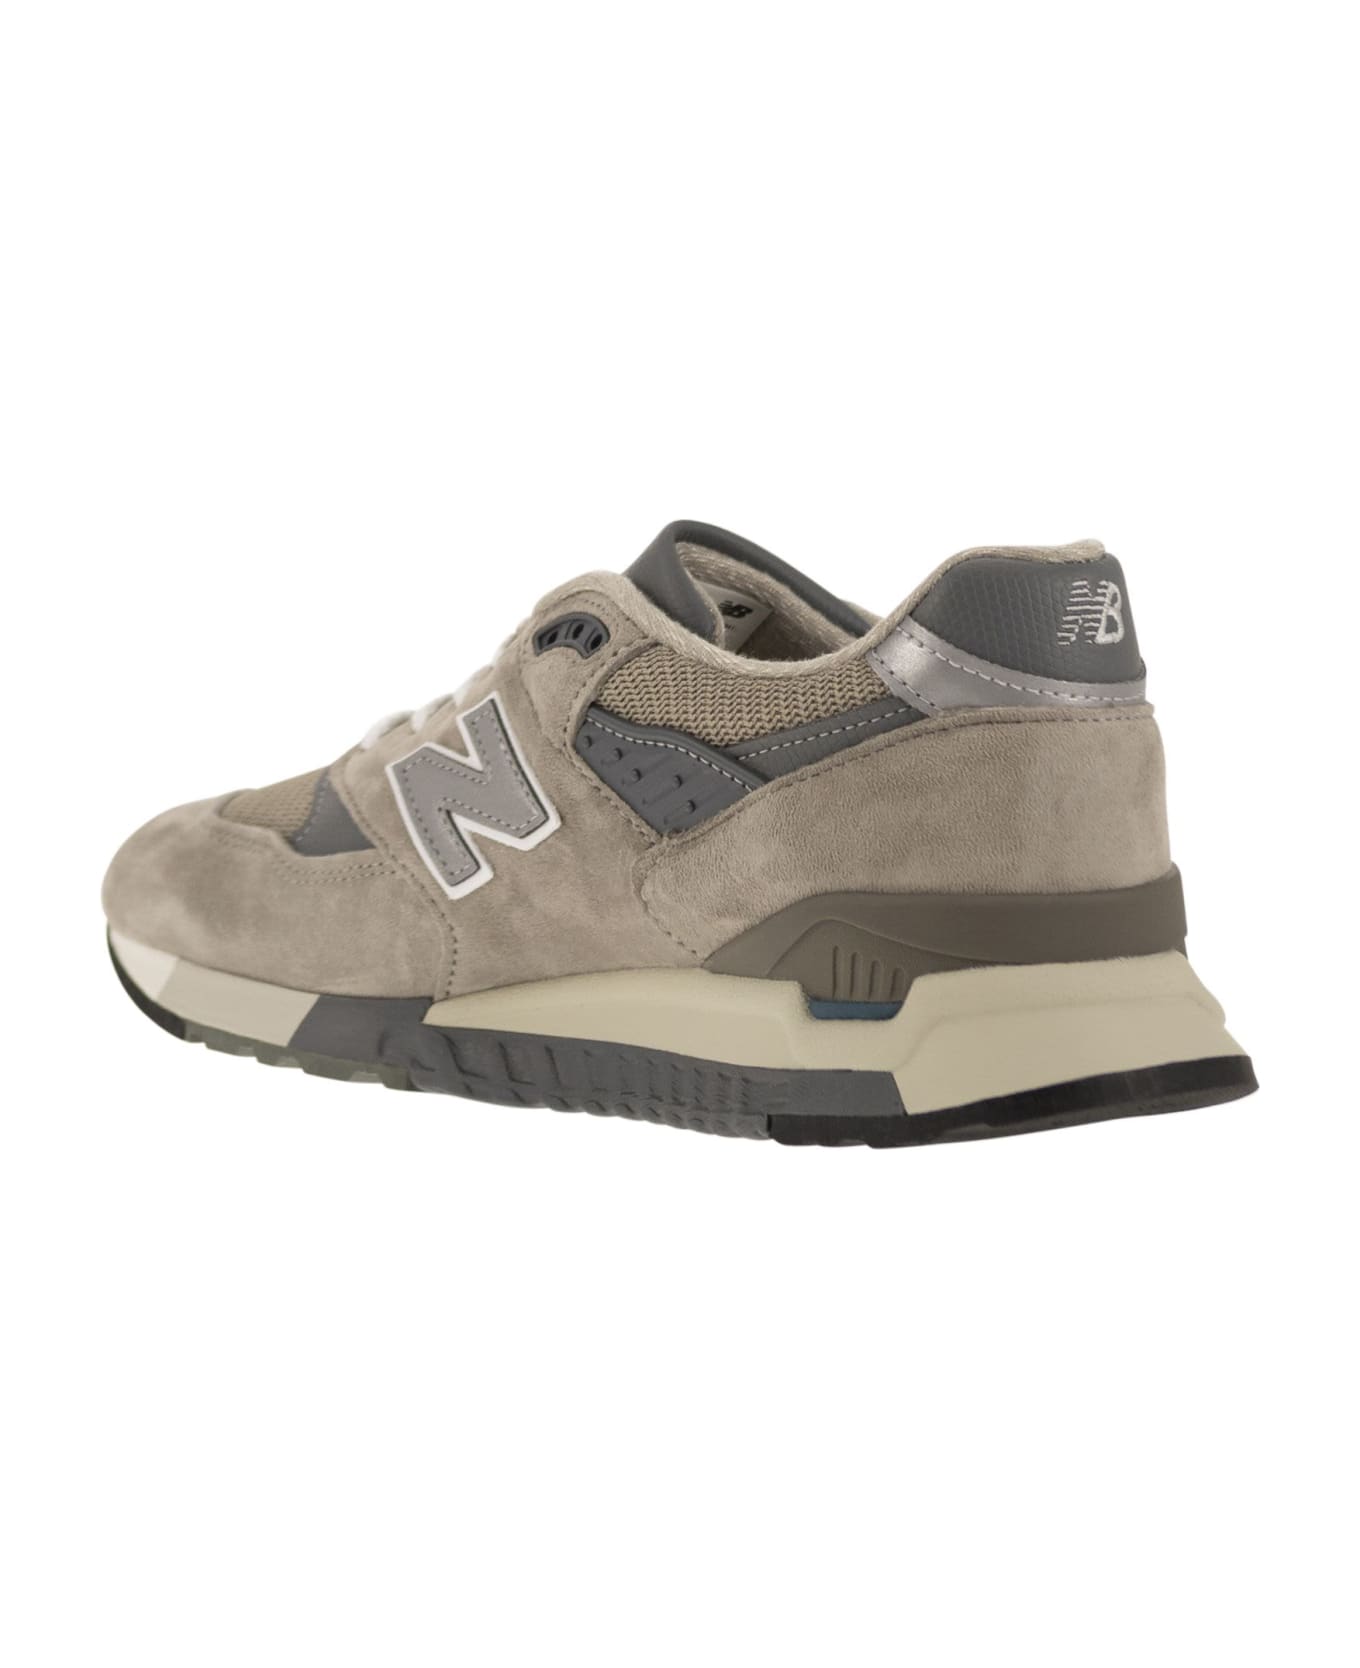 New Balance 998 - Sneakers - Beige